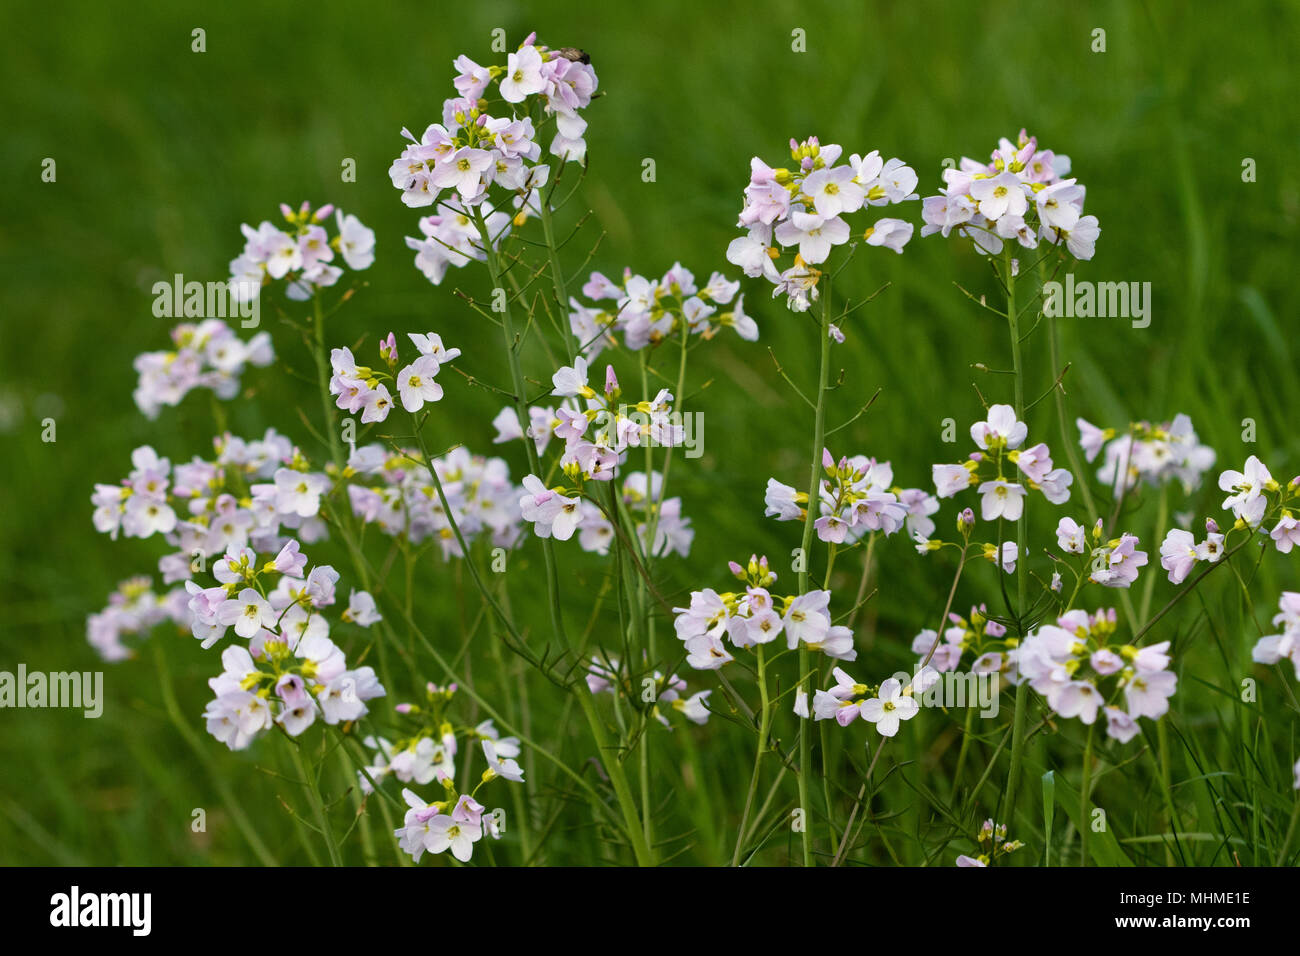 Cuckooflower / Lady's-smock (Cardamine pratensis) flowers Stock Photo